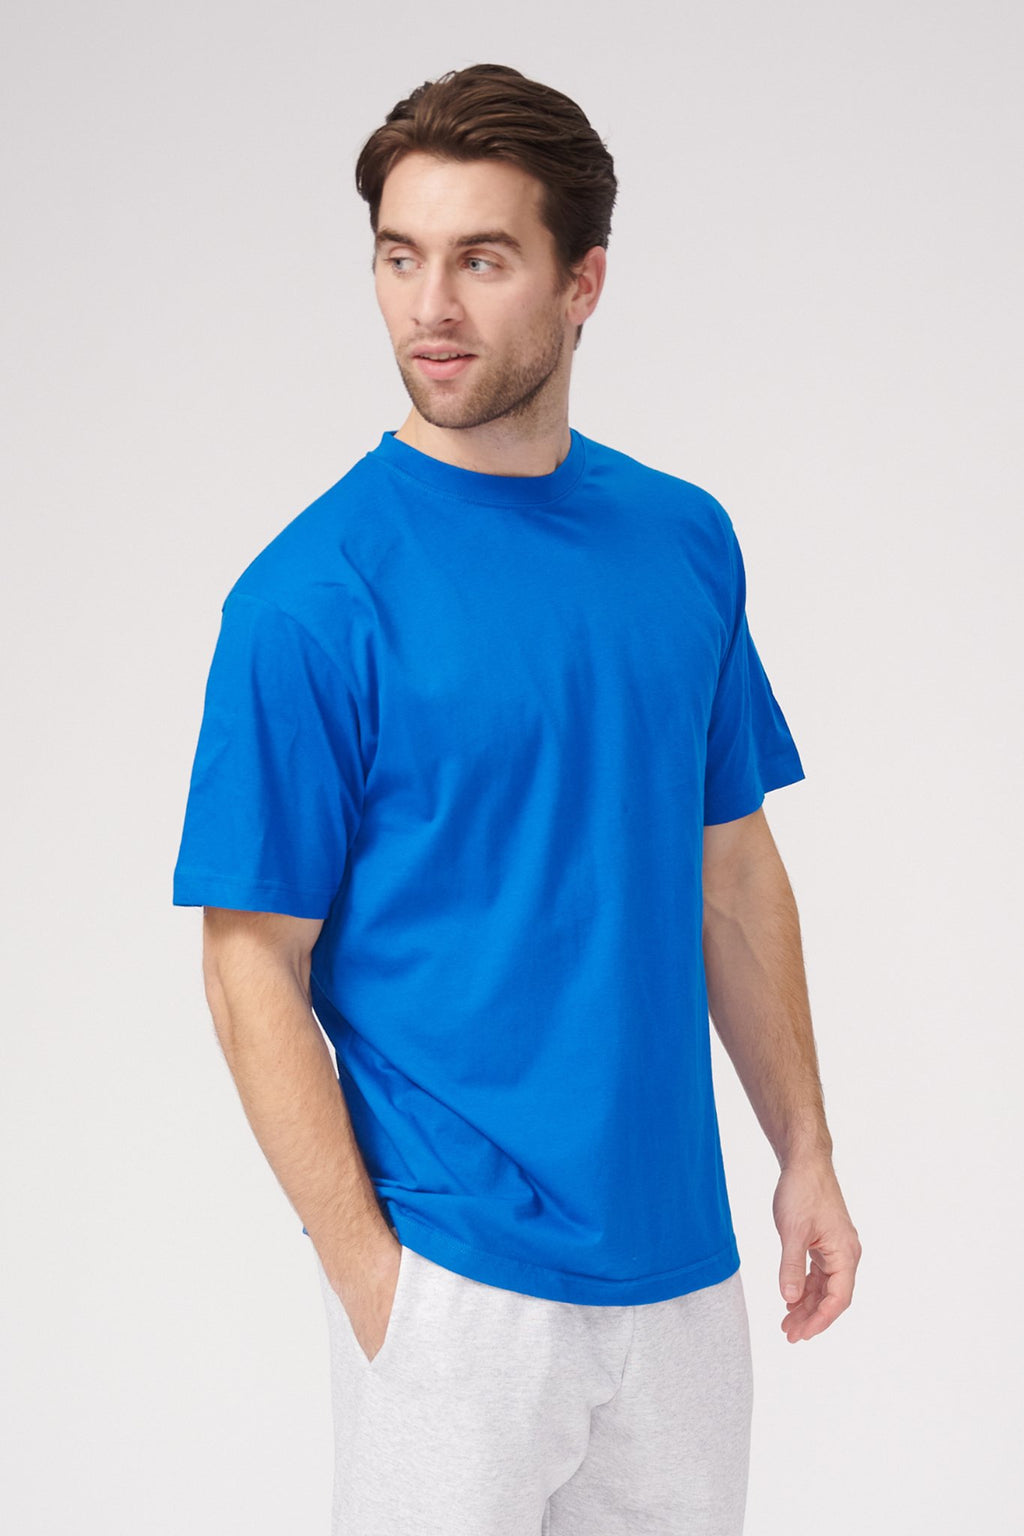 Oversized T -shirt - Zweeds blauw